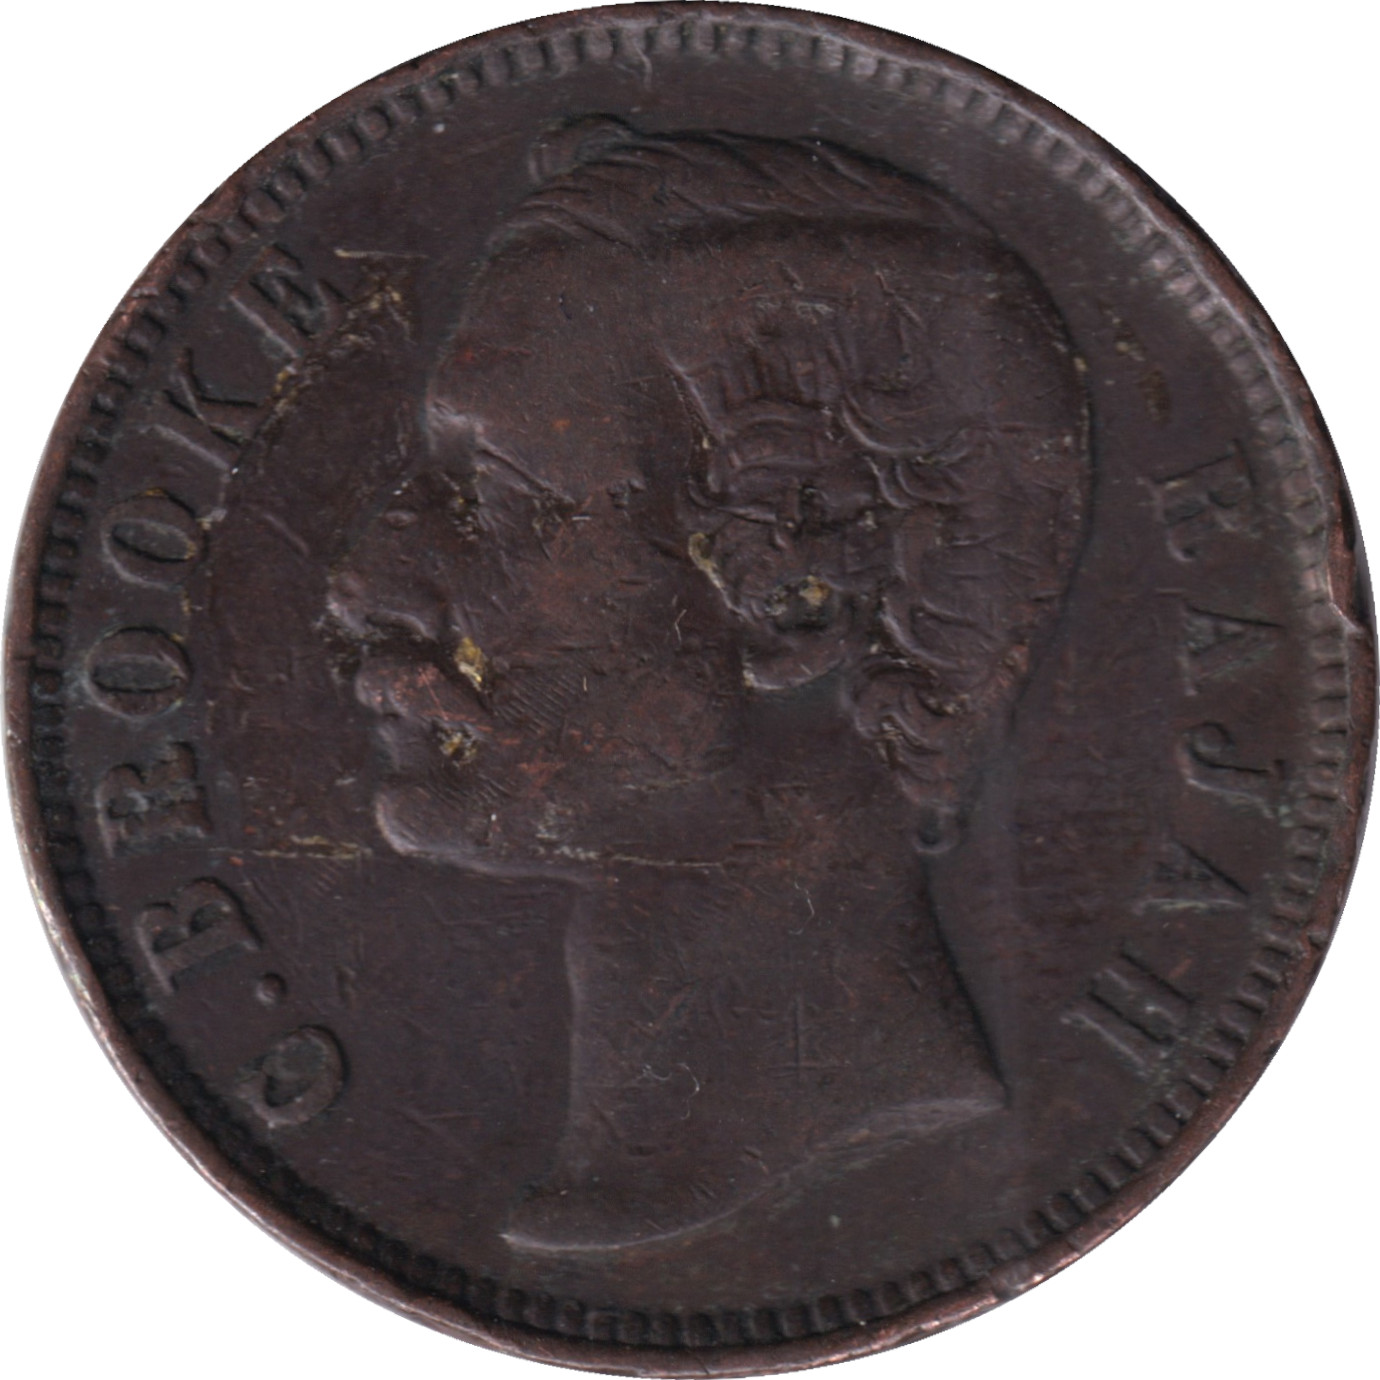 1 cent - Charles J. Brooke - Type 1